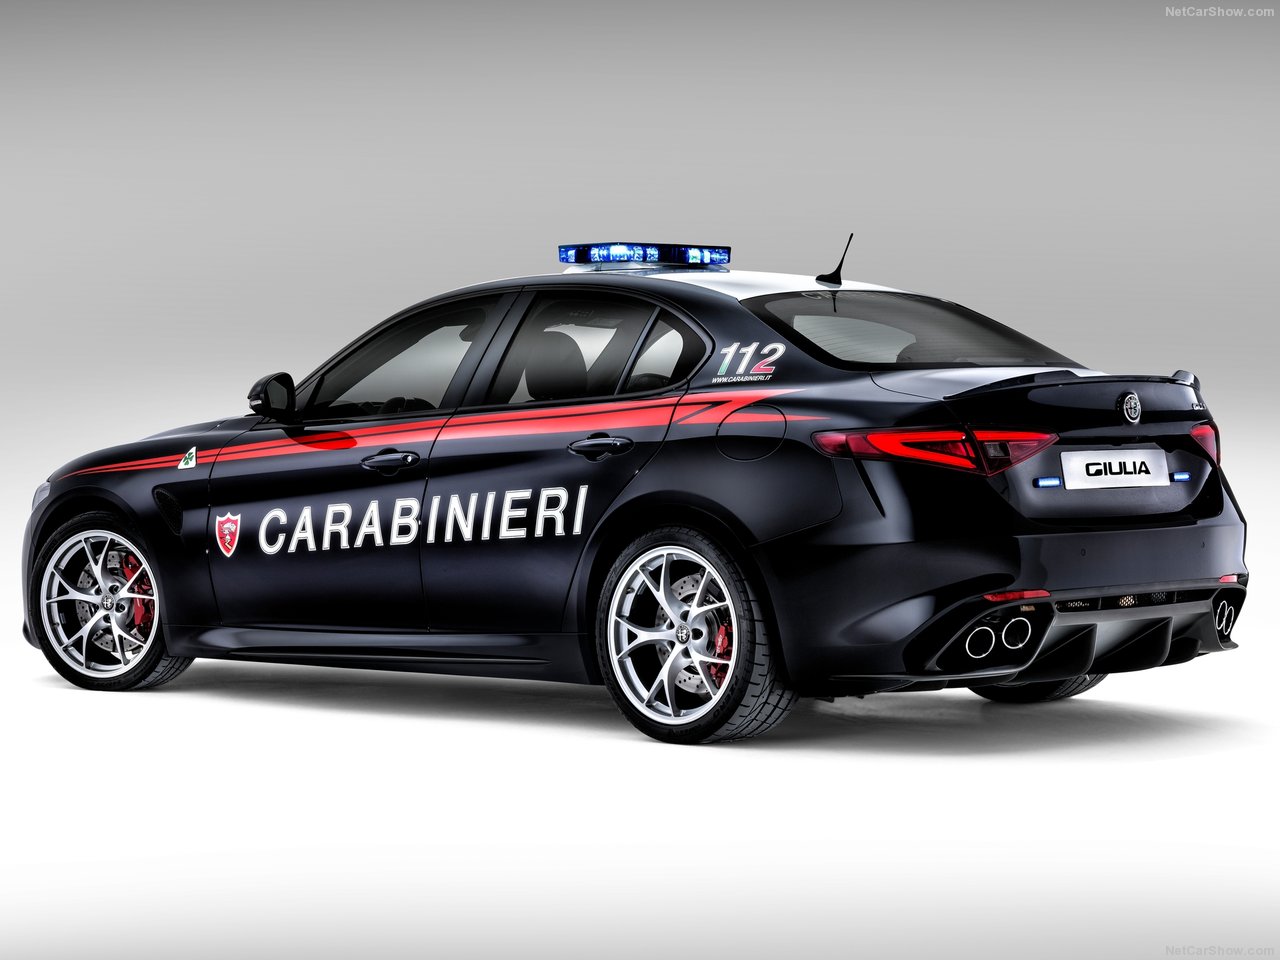 NFS - Need for Speed - Alfa Romeo Giulia Carabinieri